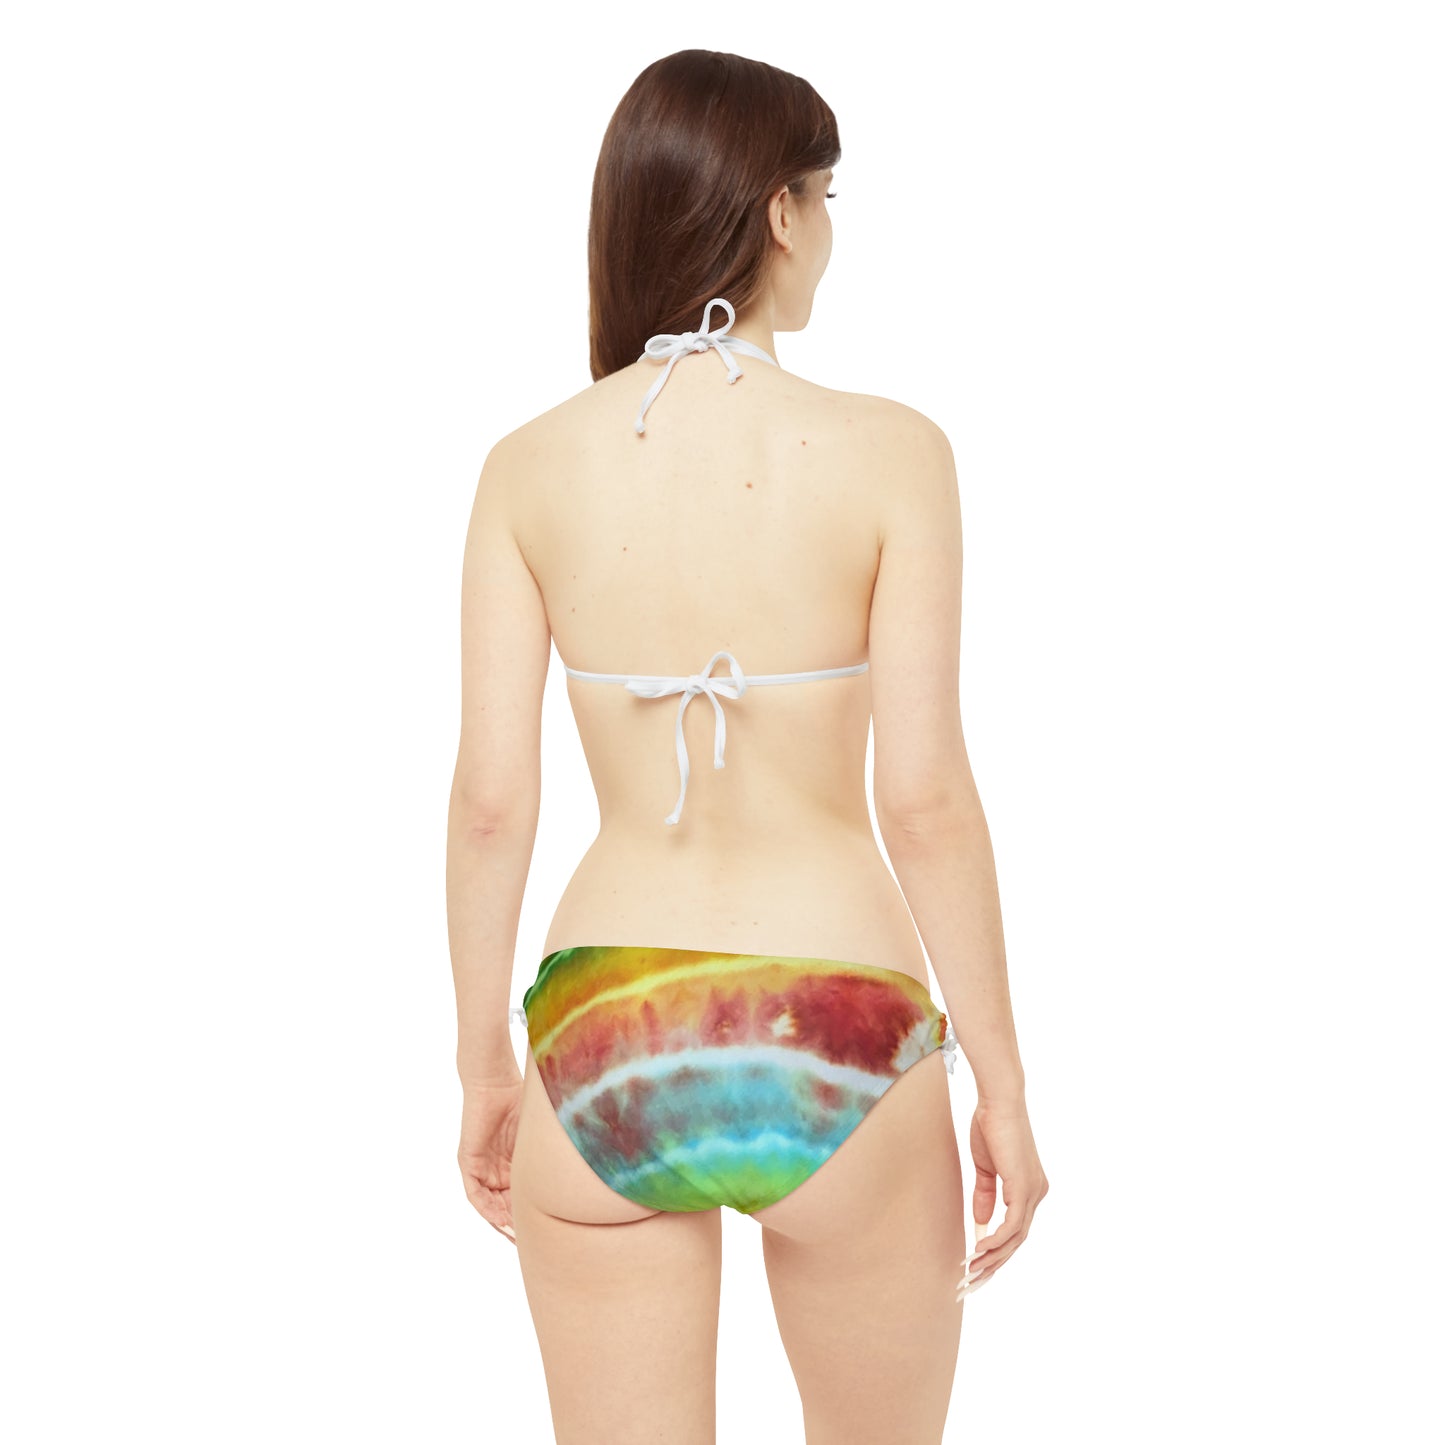 Voodoo Geode Strappy Bikini Set in Spring